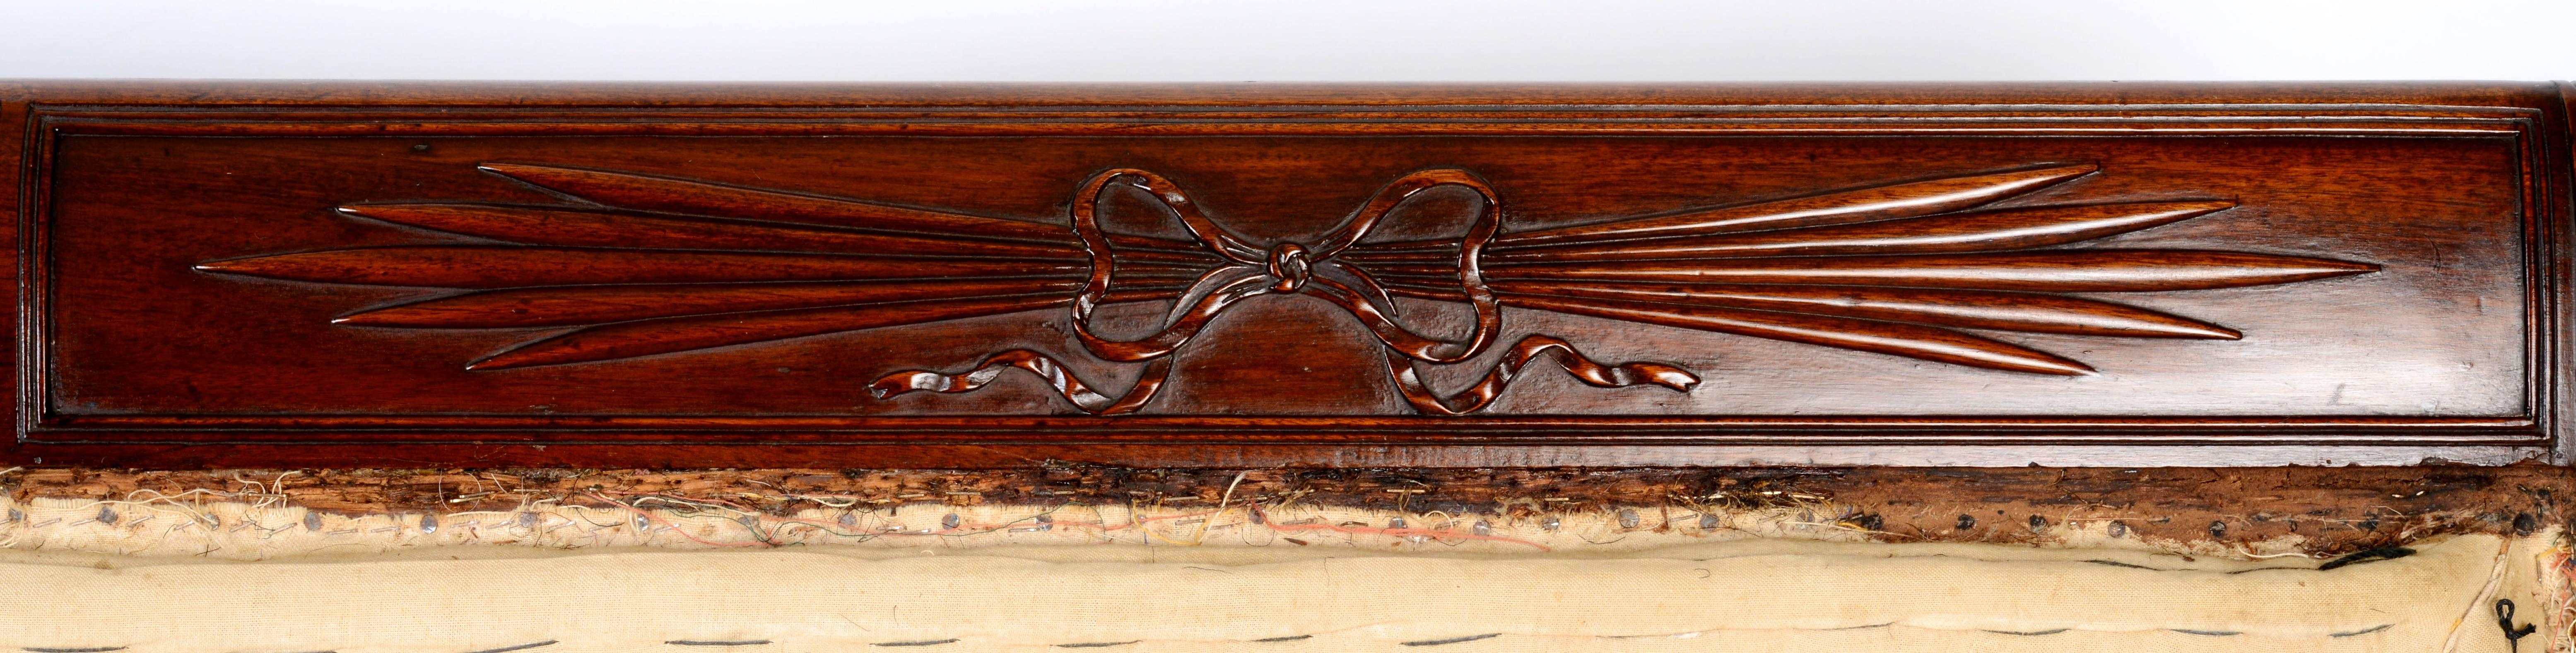 Federal Period Carved Mahogany Sofa Attributed to Duncan Phyfe NY, circa 1810 1